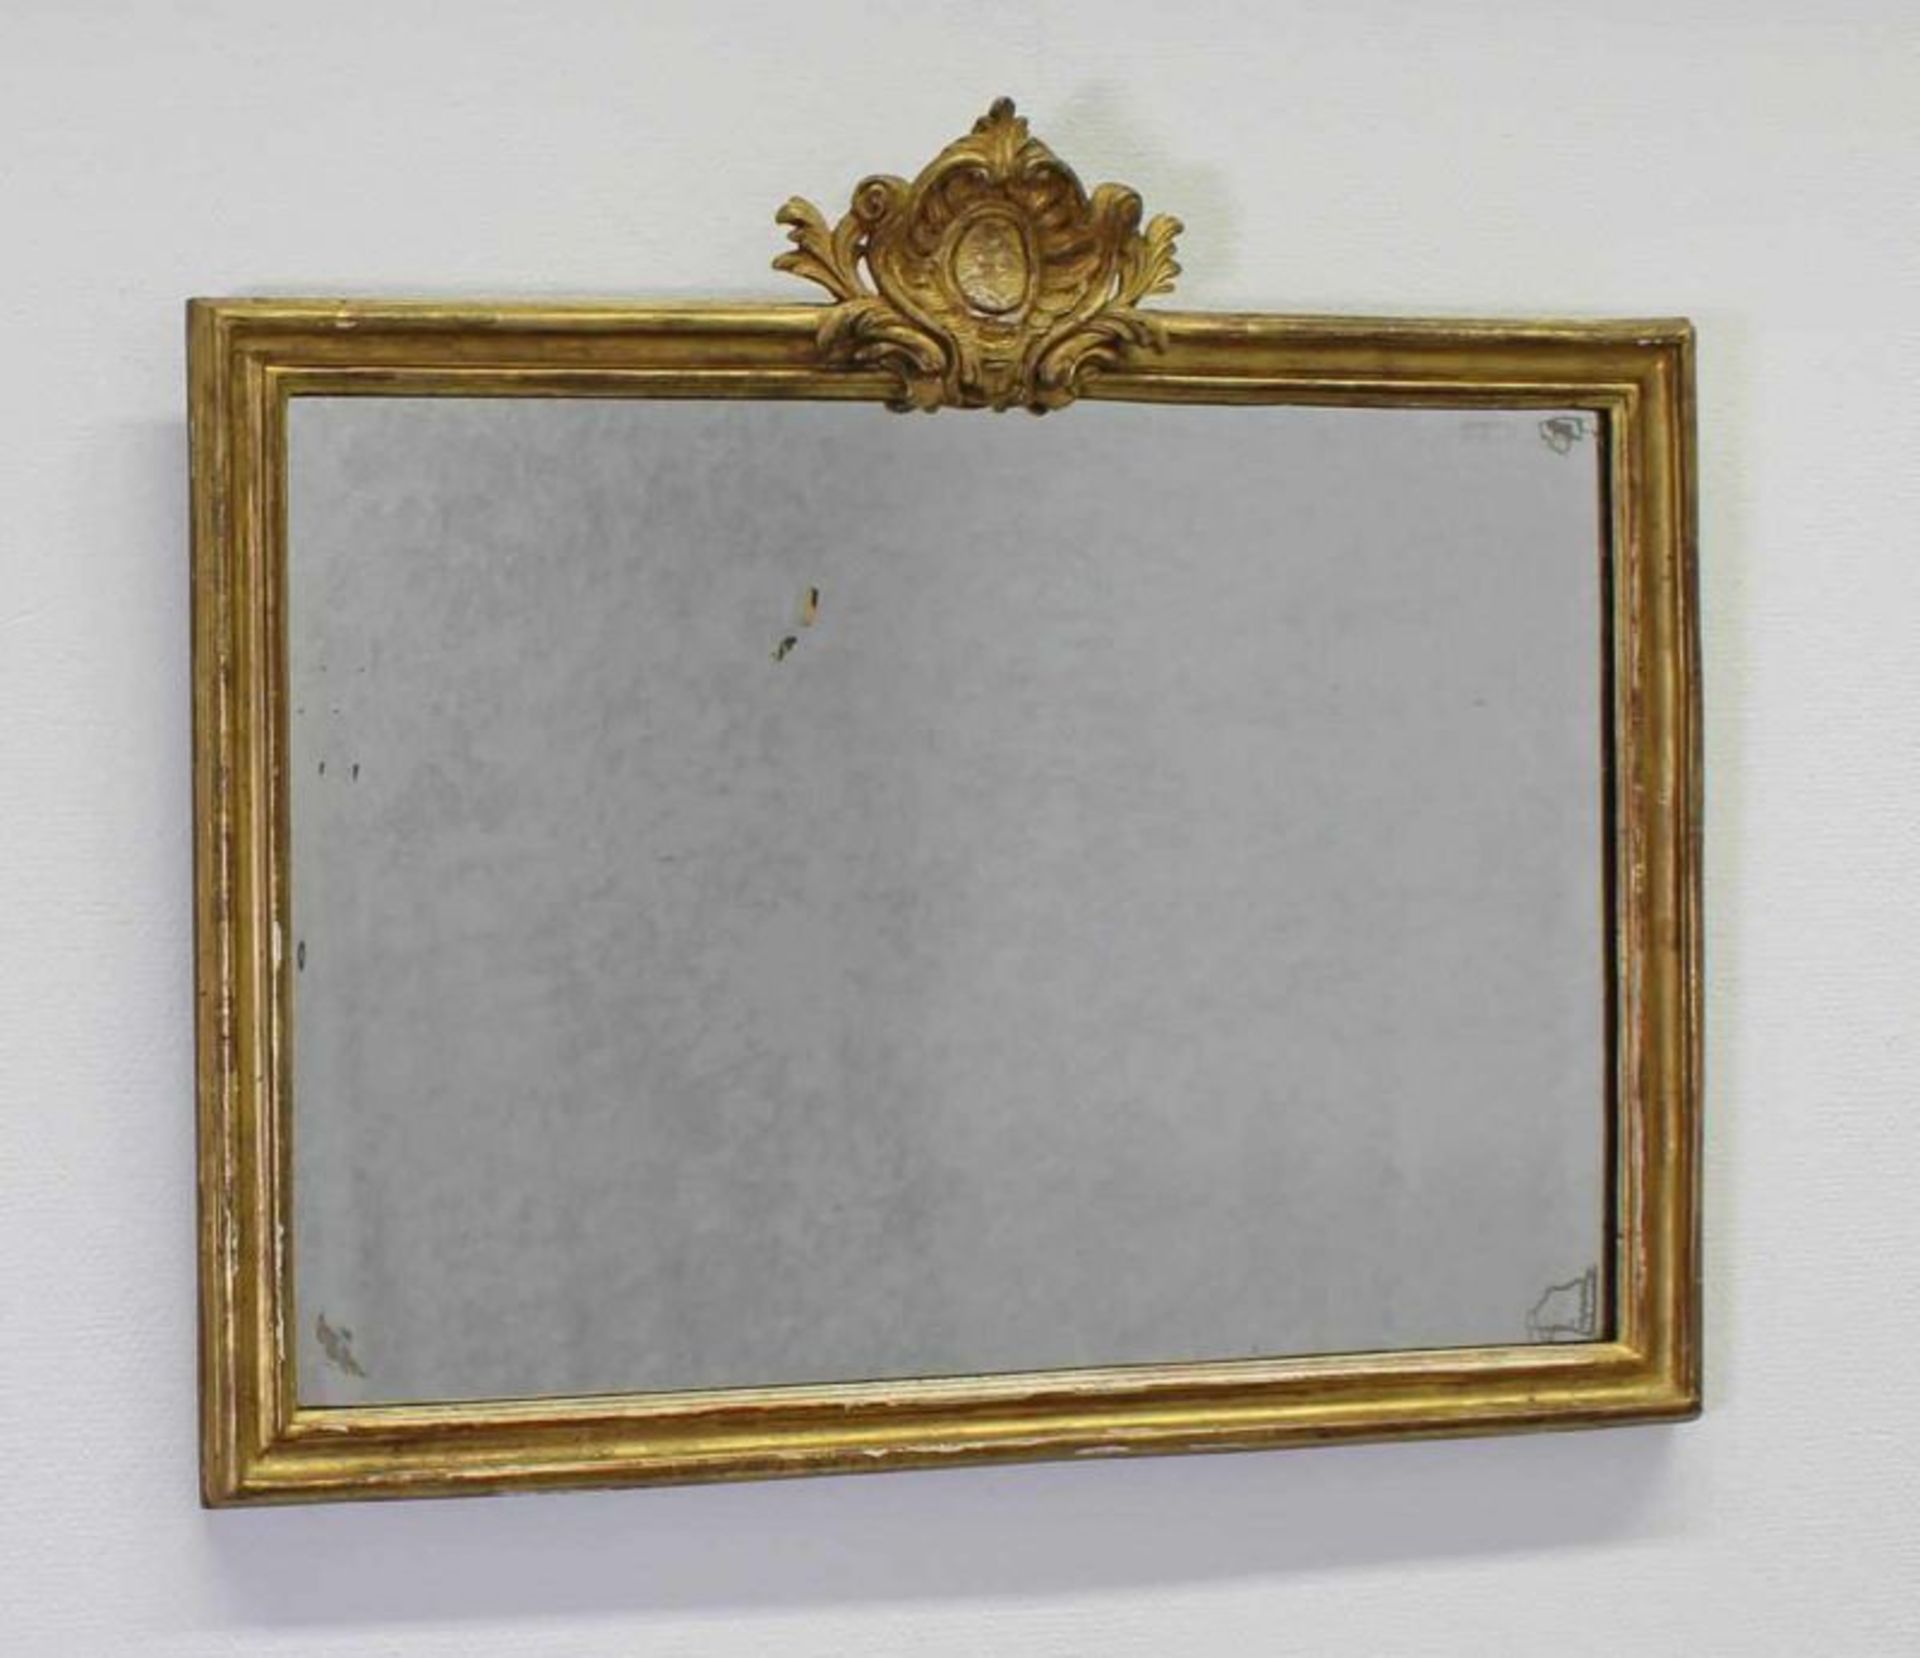 Paar Spiegel, Ende 18. Jh., Holz, gold gefasst, bekrönend geschnitzte Rocaille, je 67 x 78 cm, - Image 2 of 2